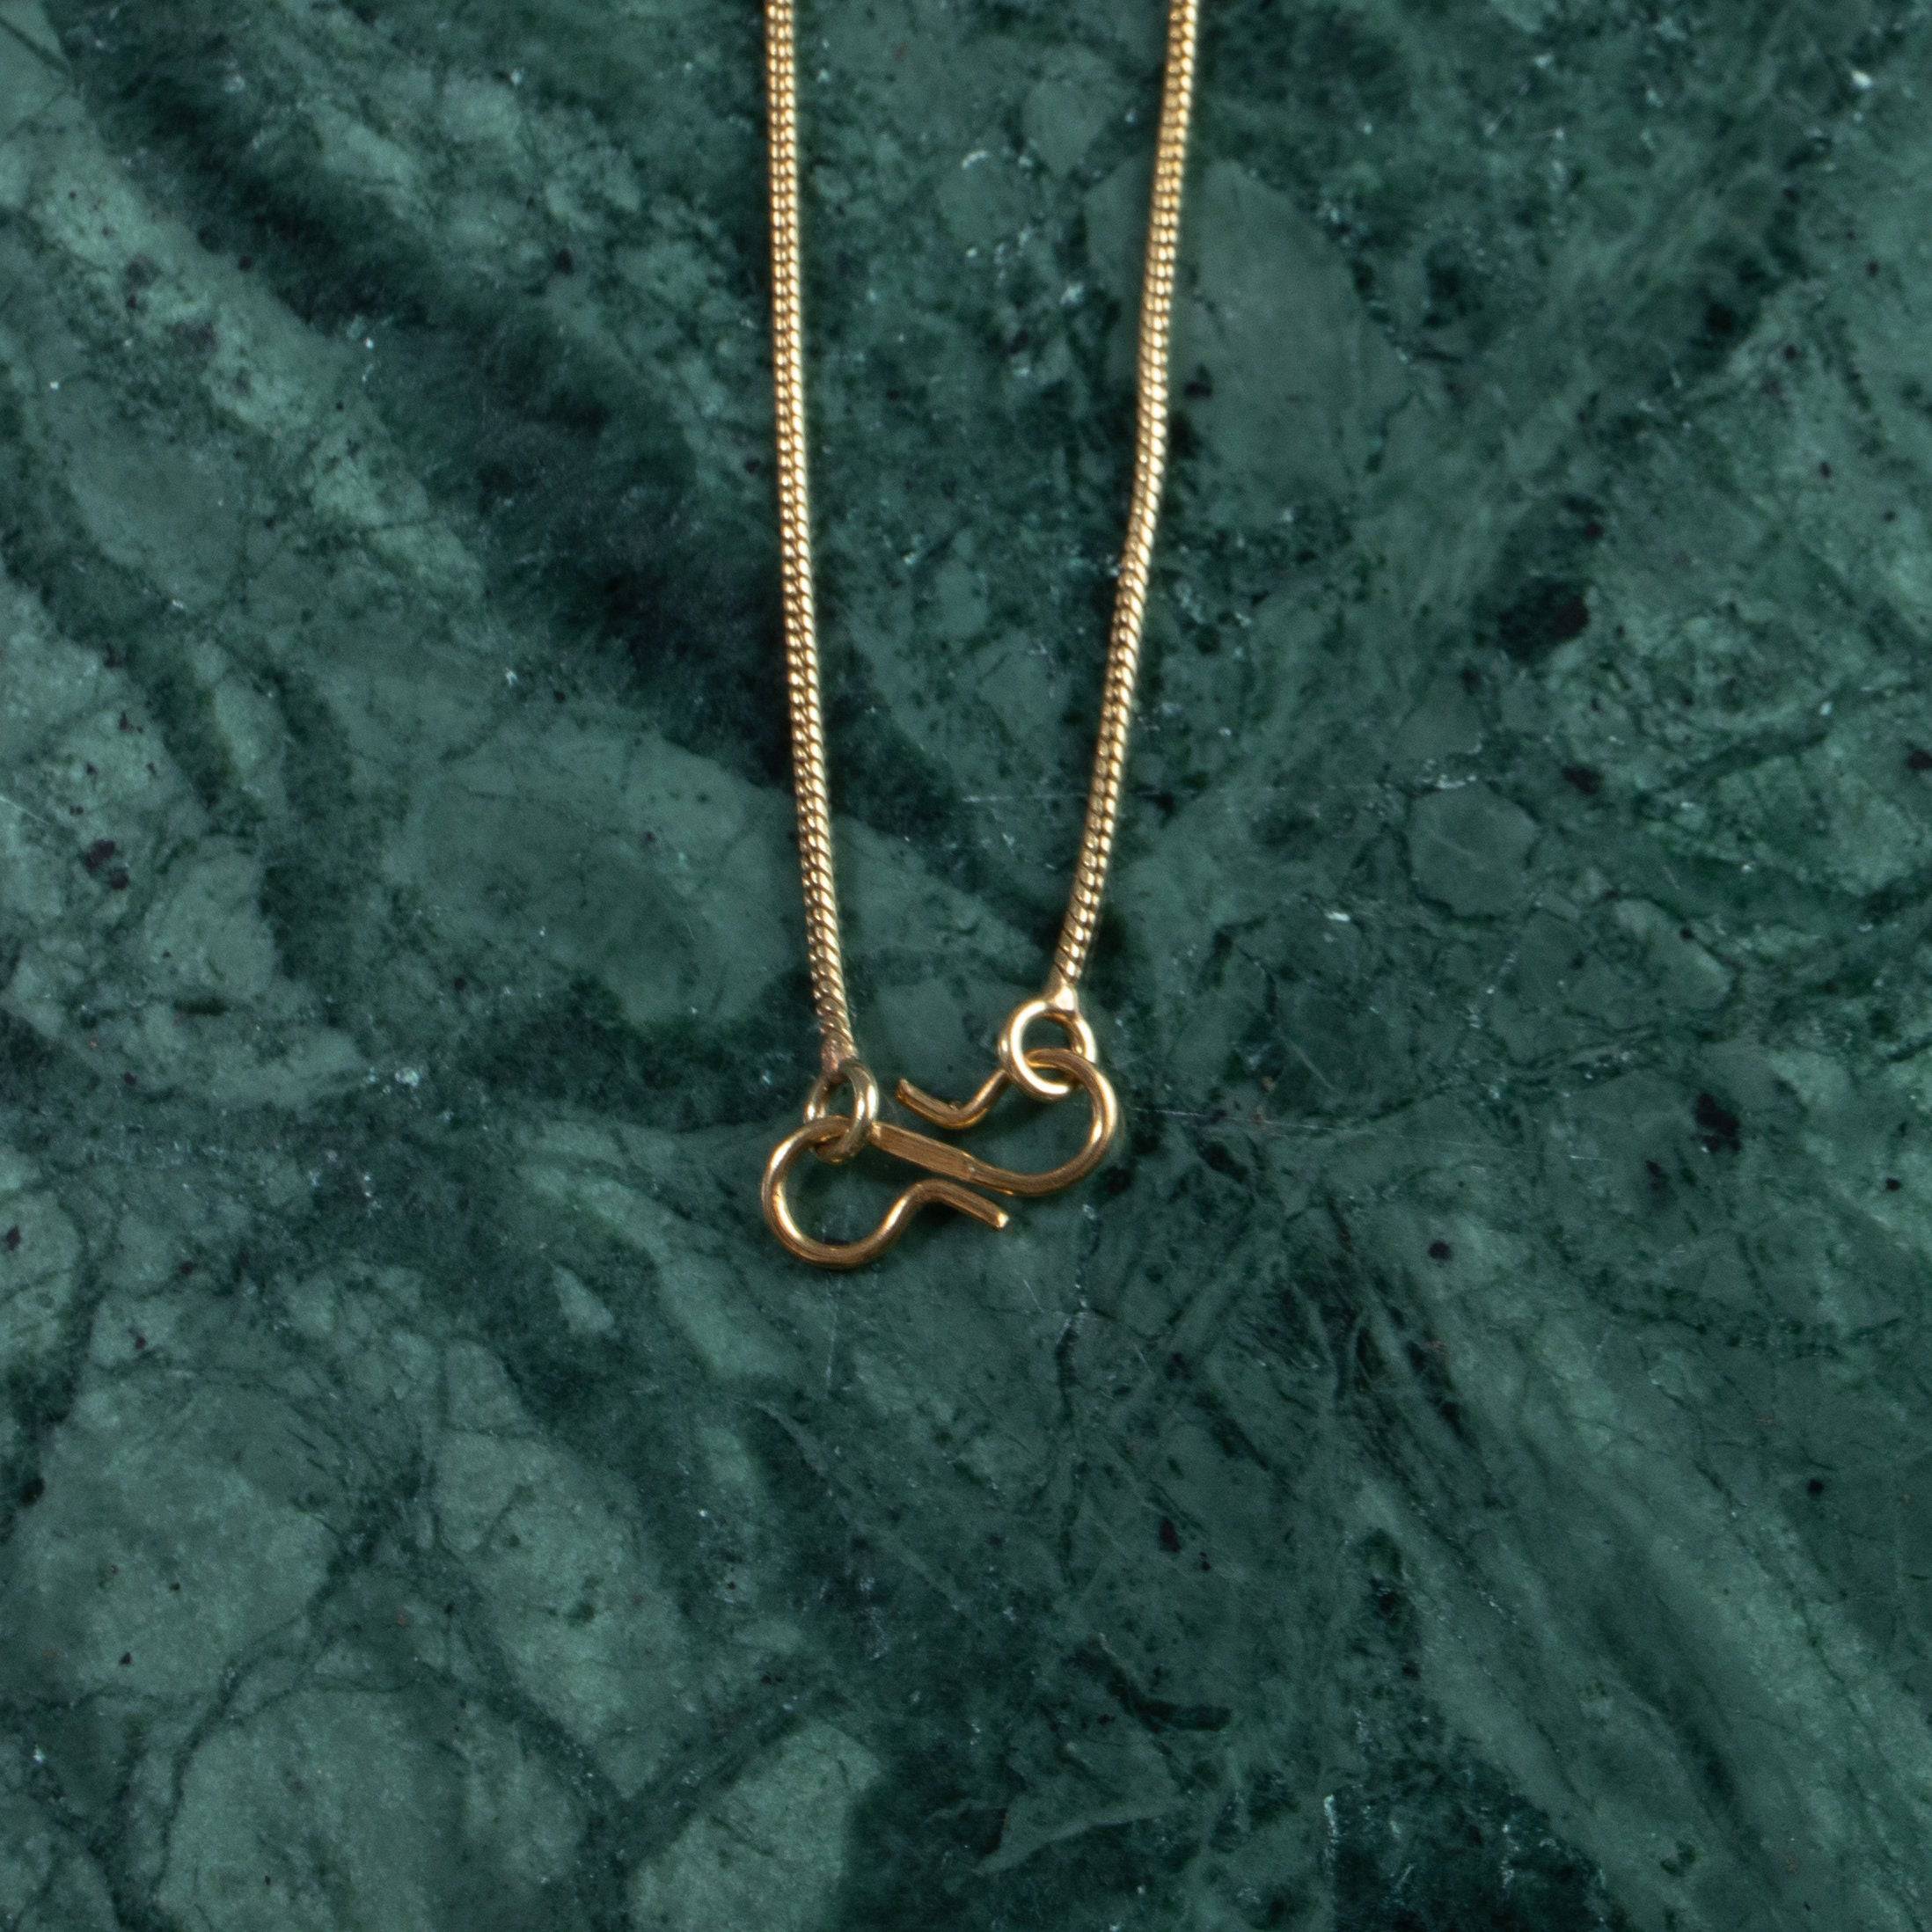 Kauri-Muschel-Halskette handgefertigt Messing gold - NooeBerlin